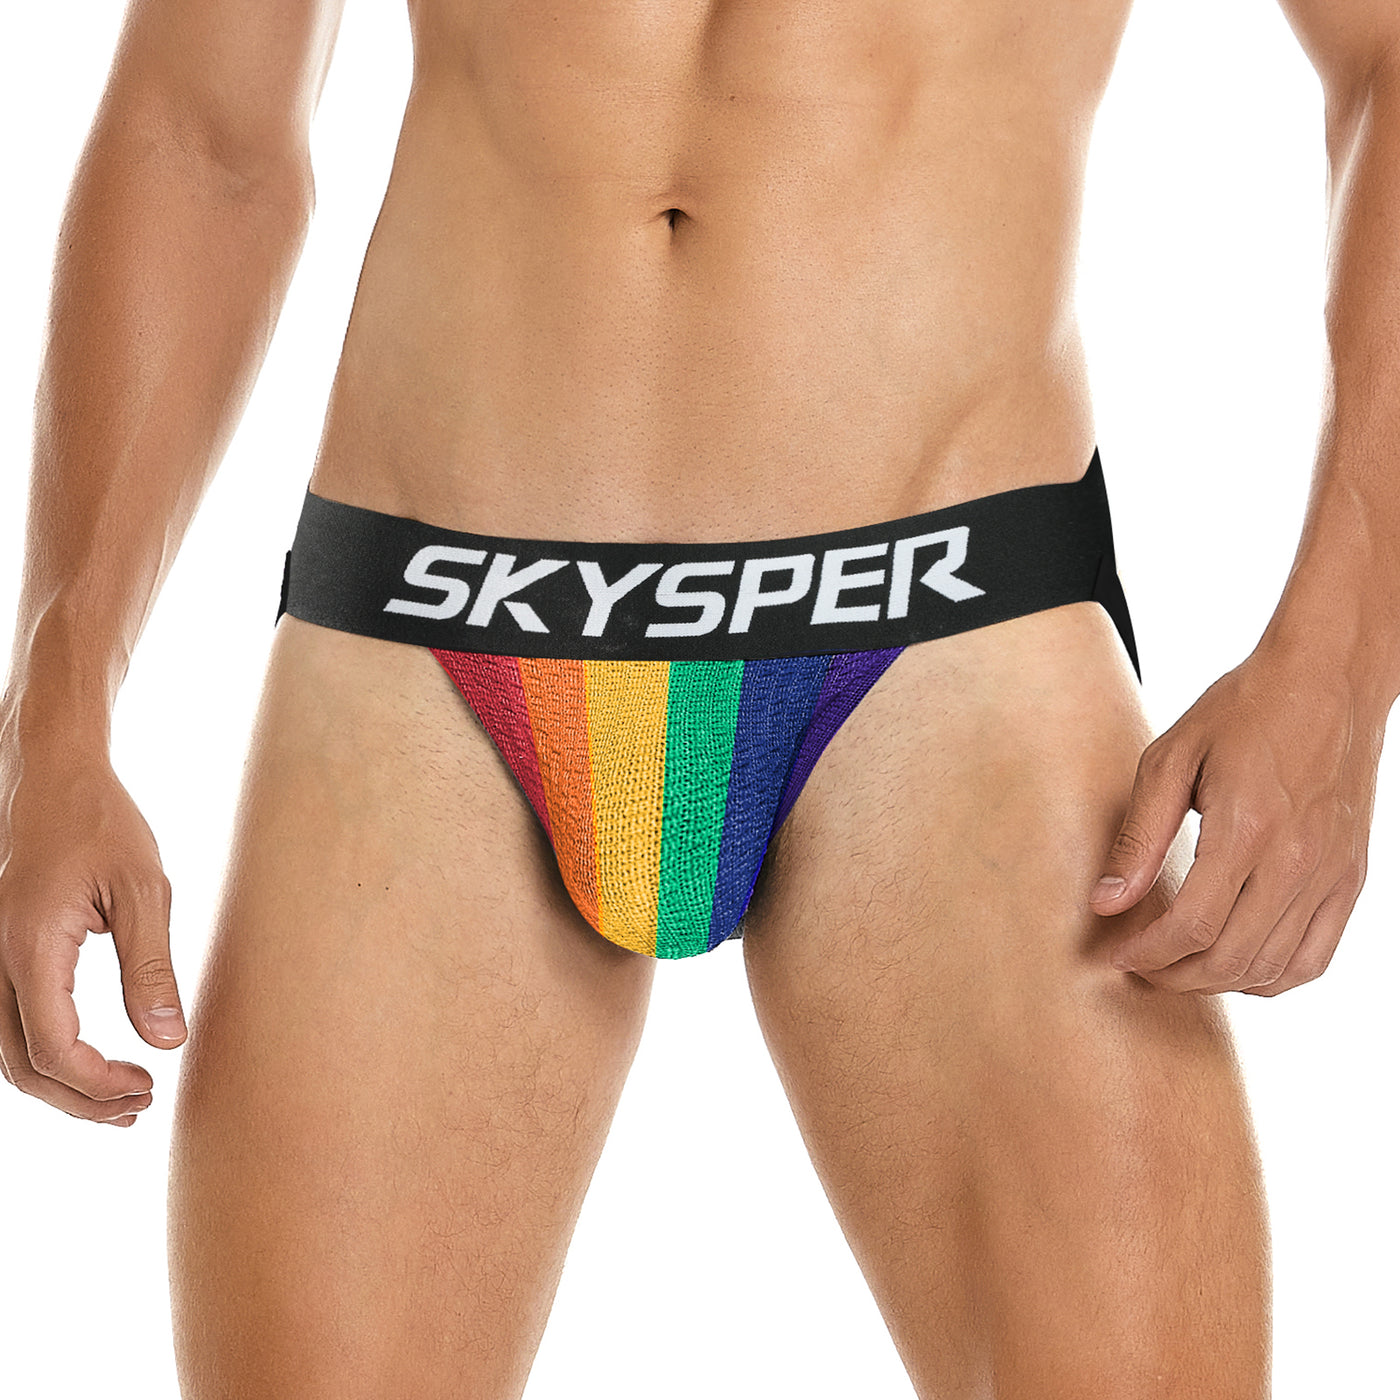 JD01- SKYSPER Men's Jockstrap Underwear Athletic Supporter